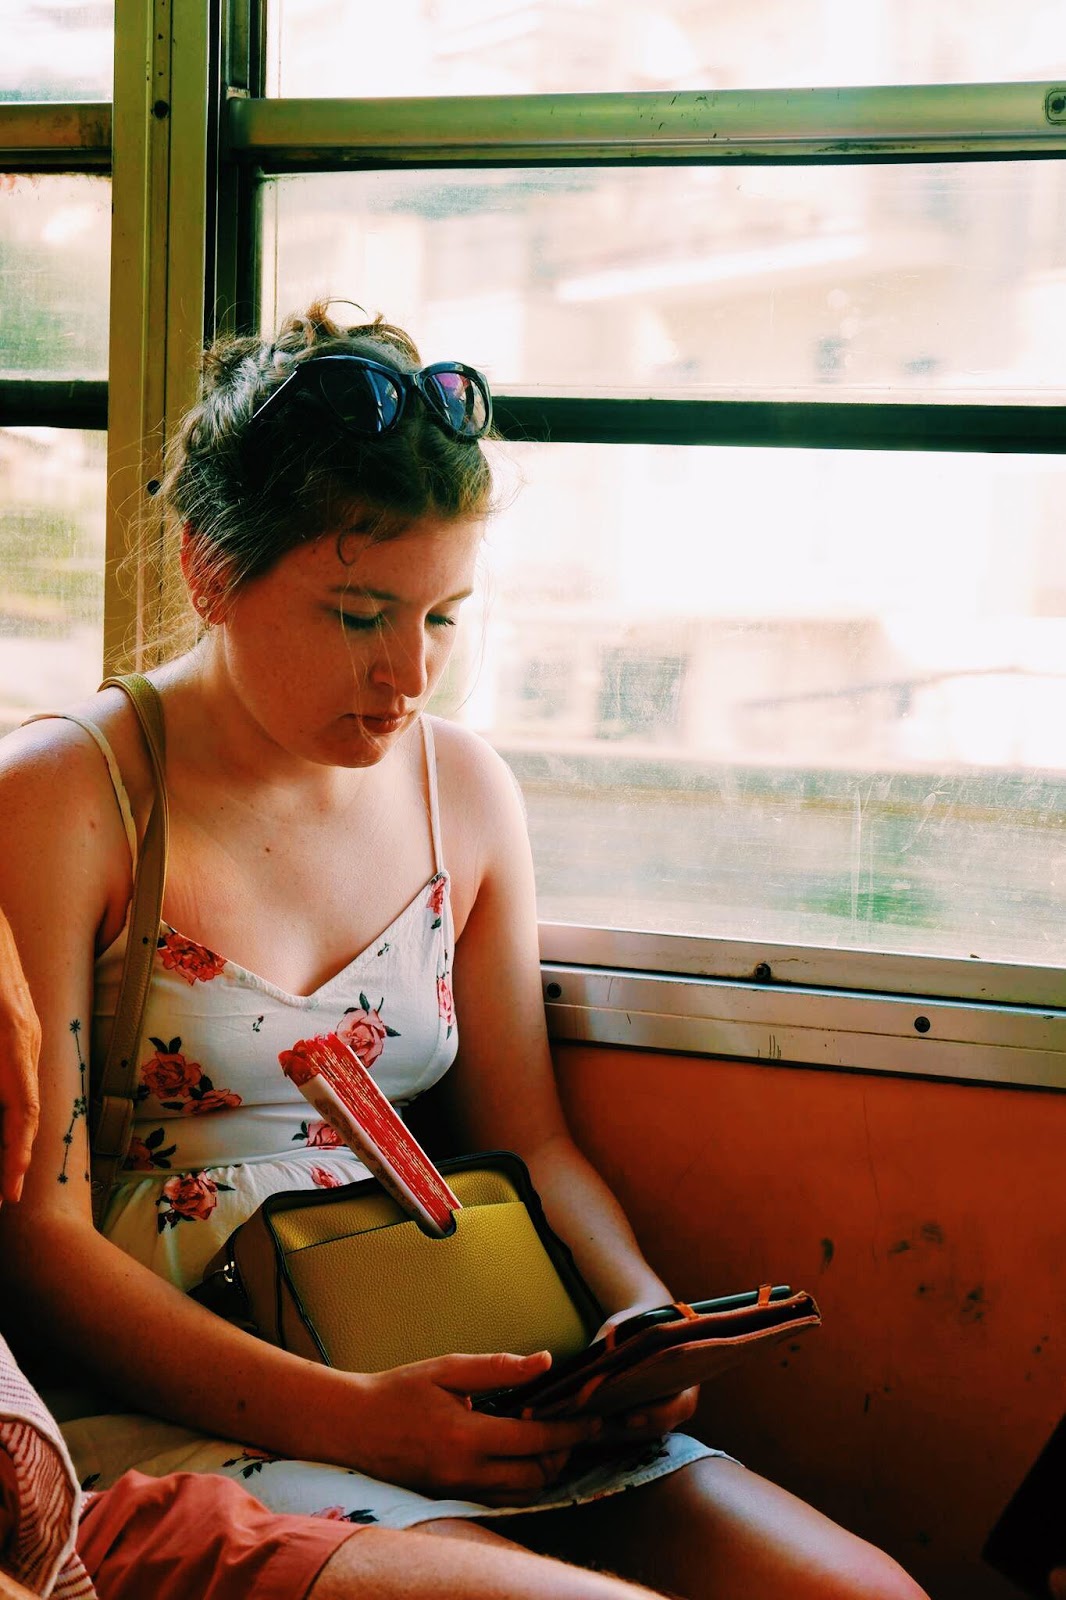 Sister sitting on a circumvesuviana train